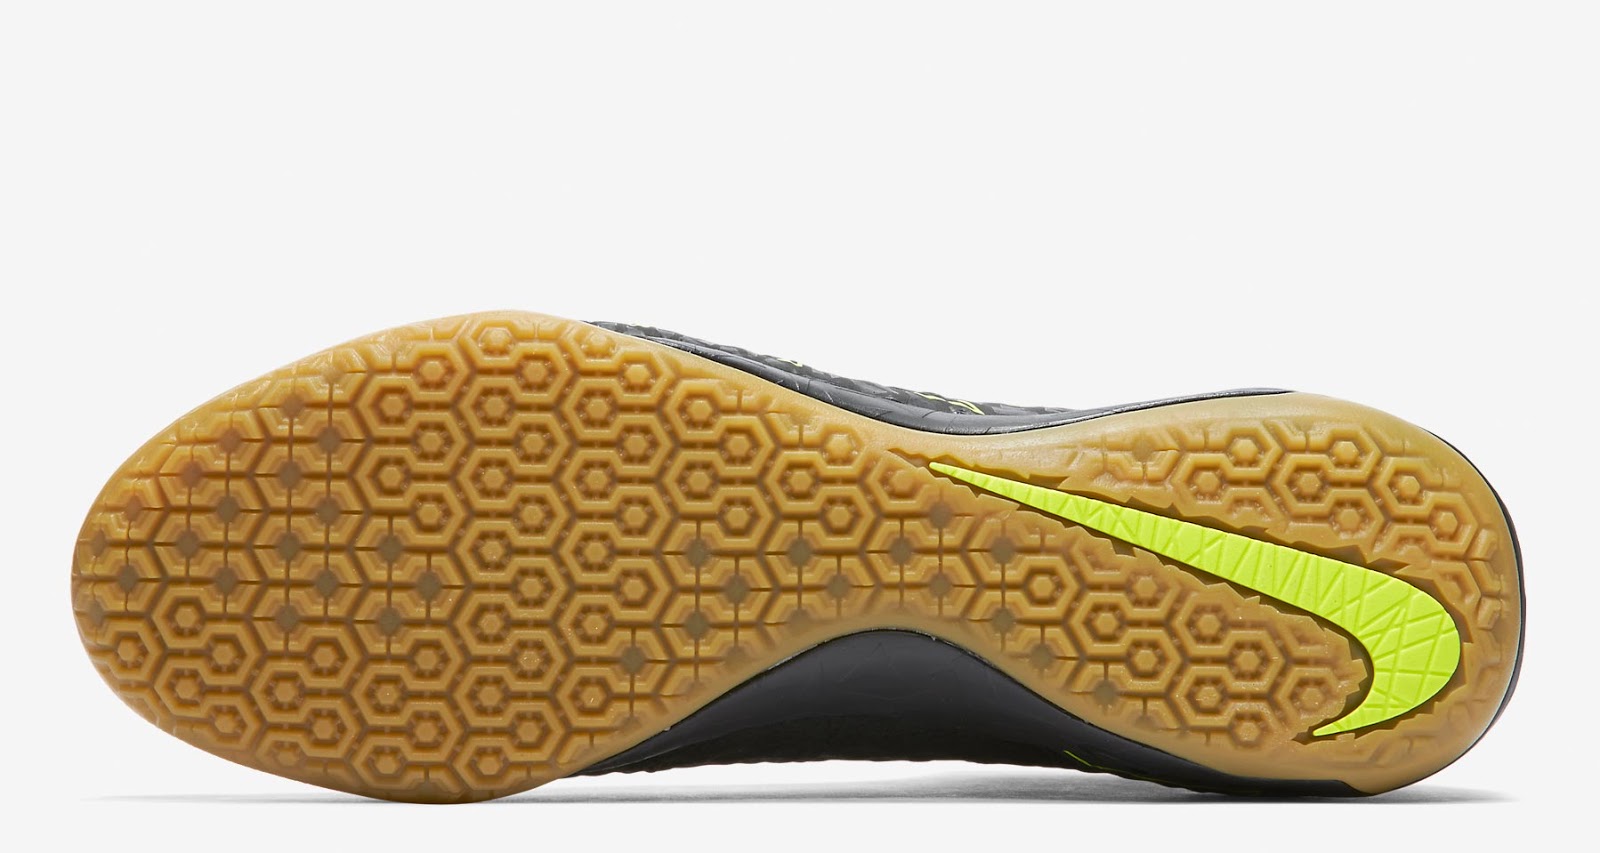 Black / Volt Nike HypervenomX Proximo Pitch Dark 2016 Boots Revealed ...